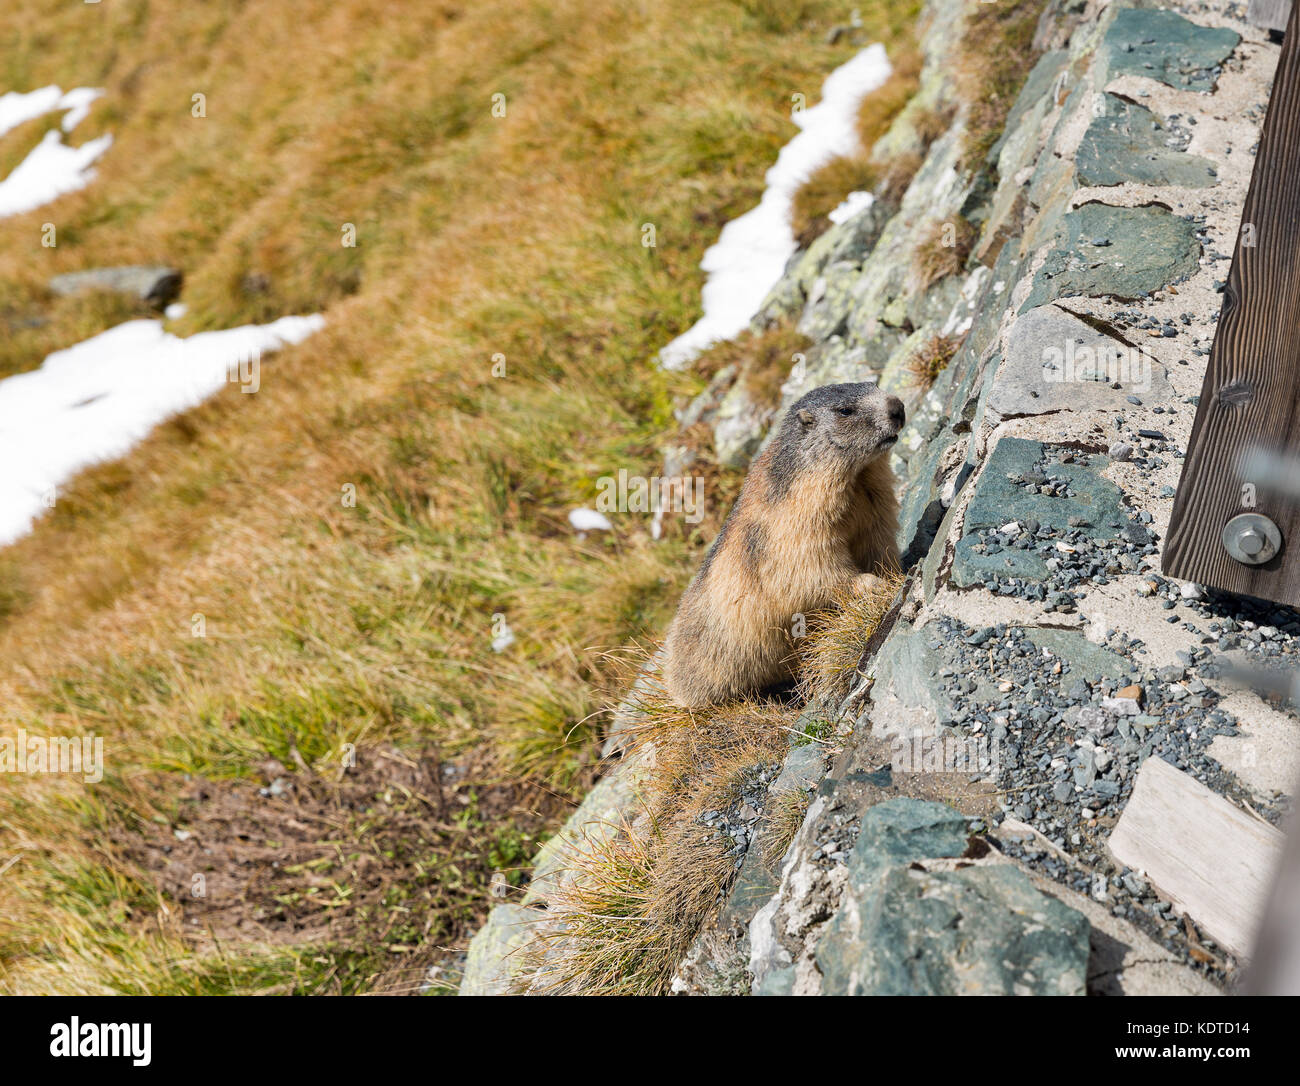 Alpine marmot on autumn mountain slope. Kaiser Franz Joseph glacier, Grossglockner High Alpine Road in Austrian Alps. Stock Photo